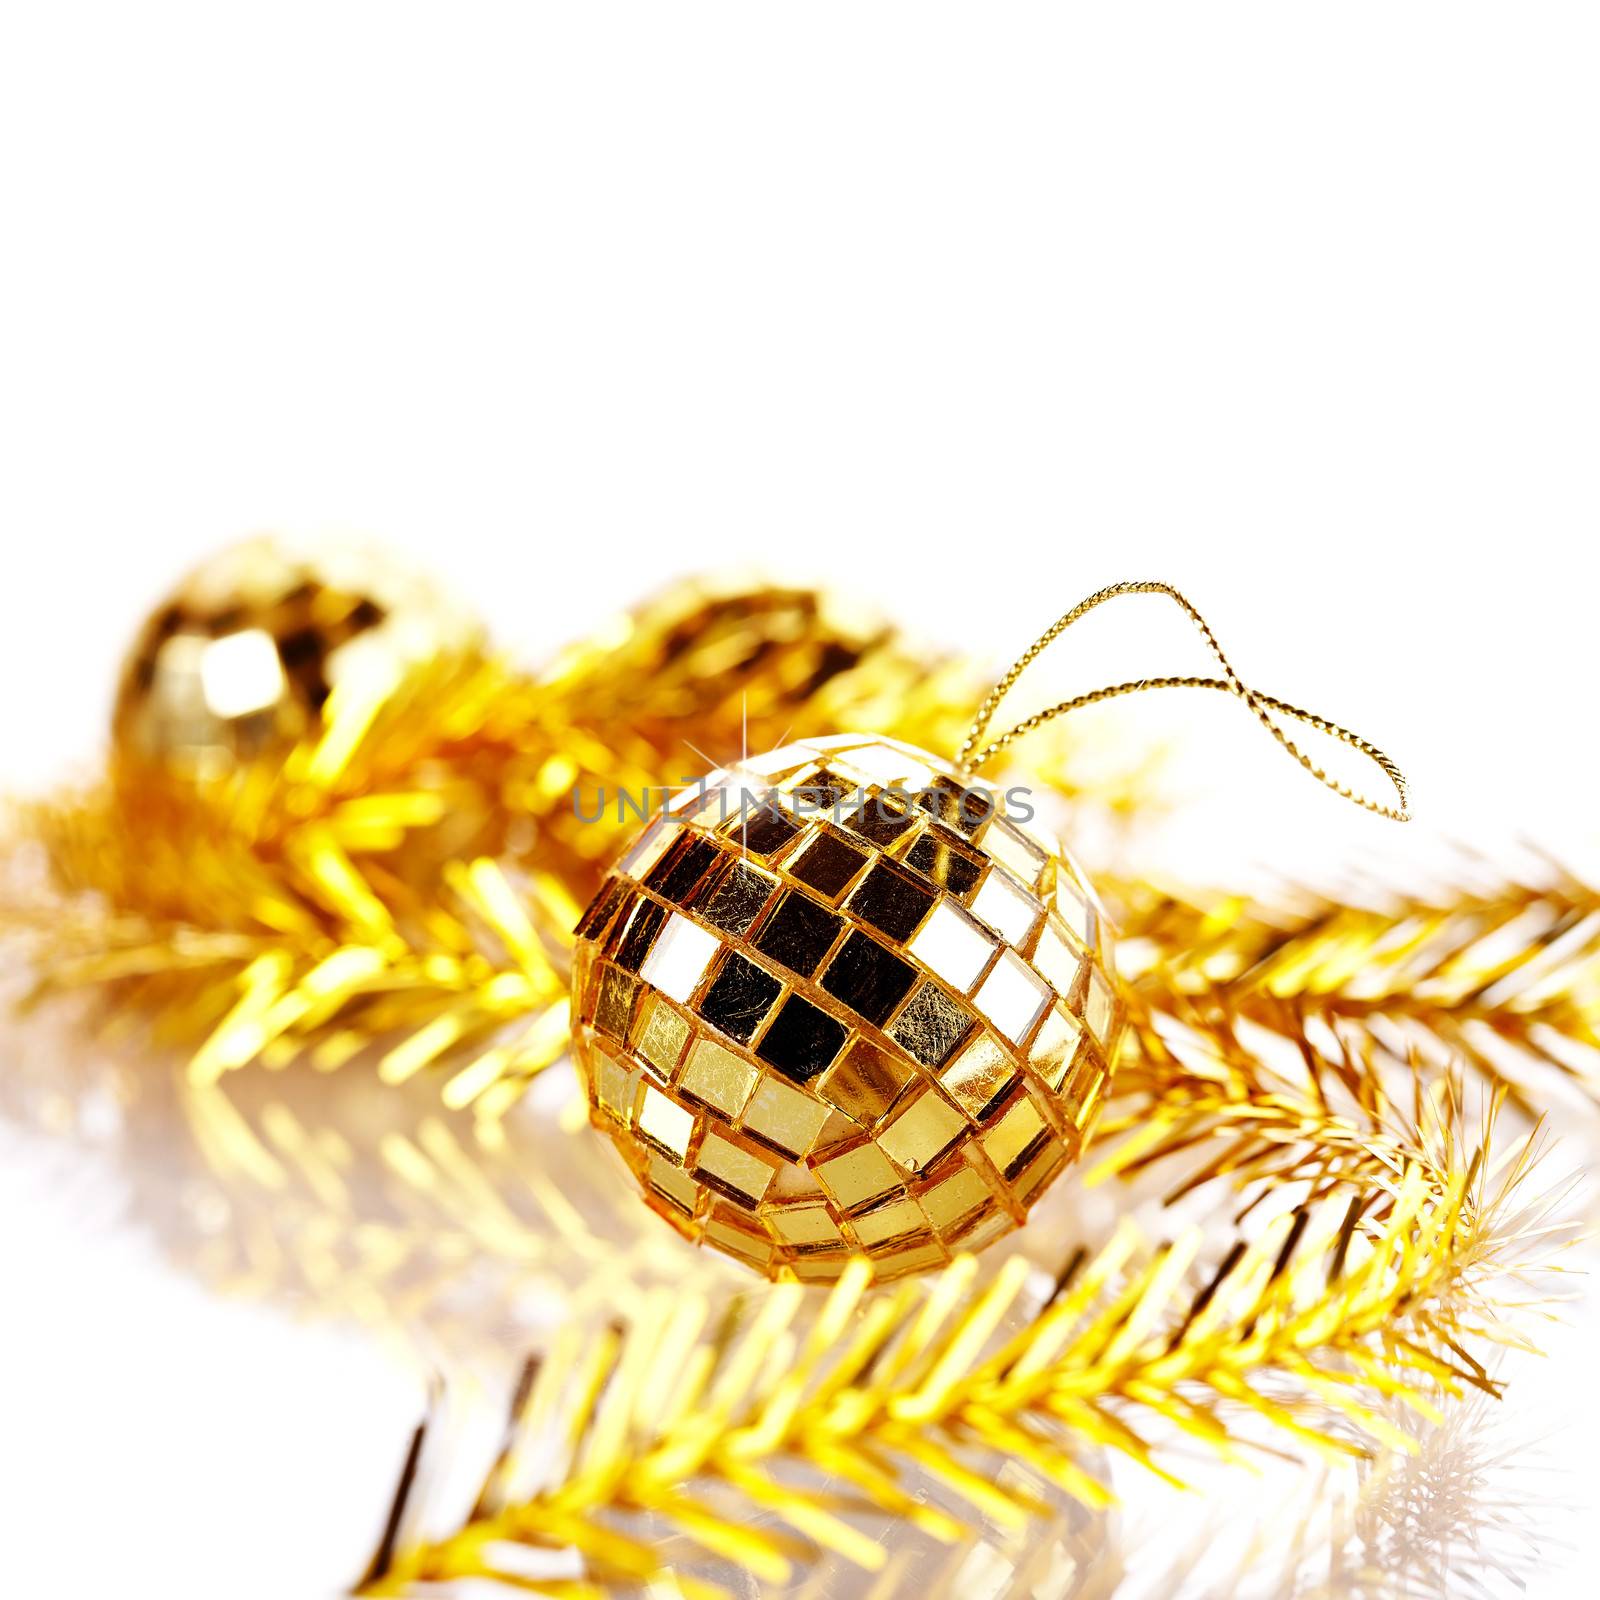 Mirror spheres. New Year's balls. Christmas tree decorations. Christmas jewelry.